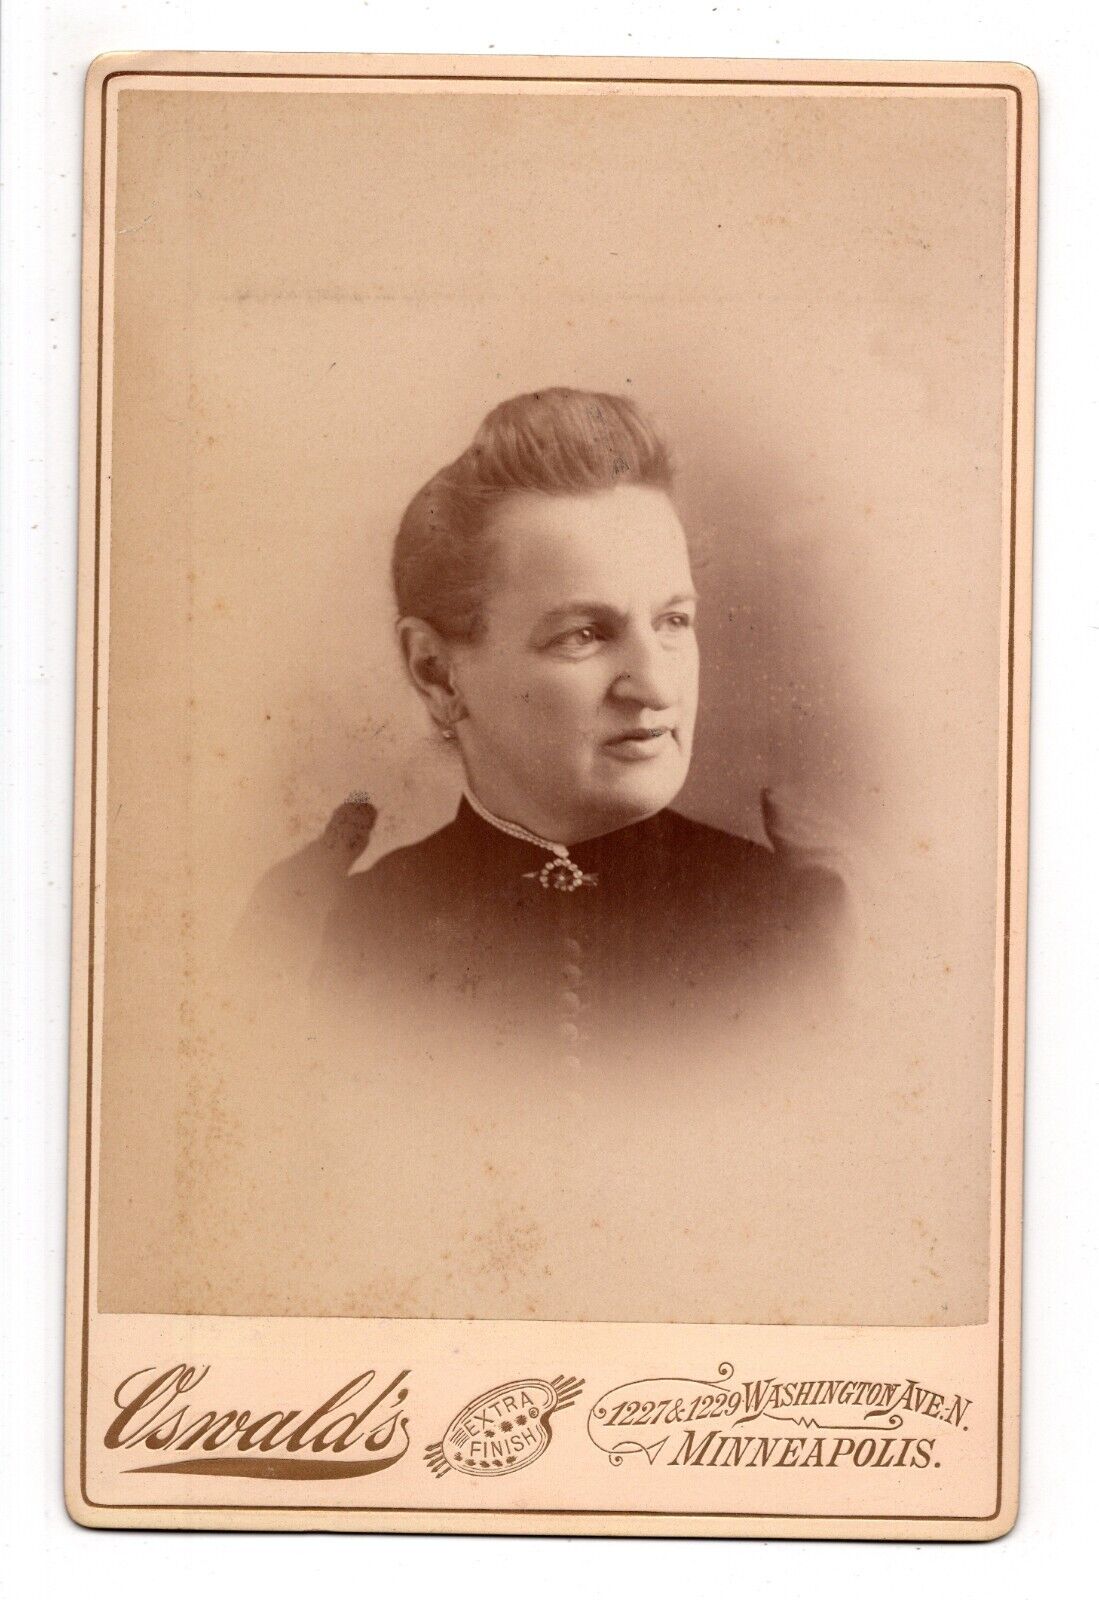 CIRCA 1880s CABINET CARD OSWALD BROS GORGEOUS YOUNG LADY MINNEAPOLIS MINNESOTA